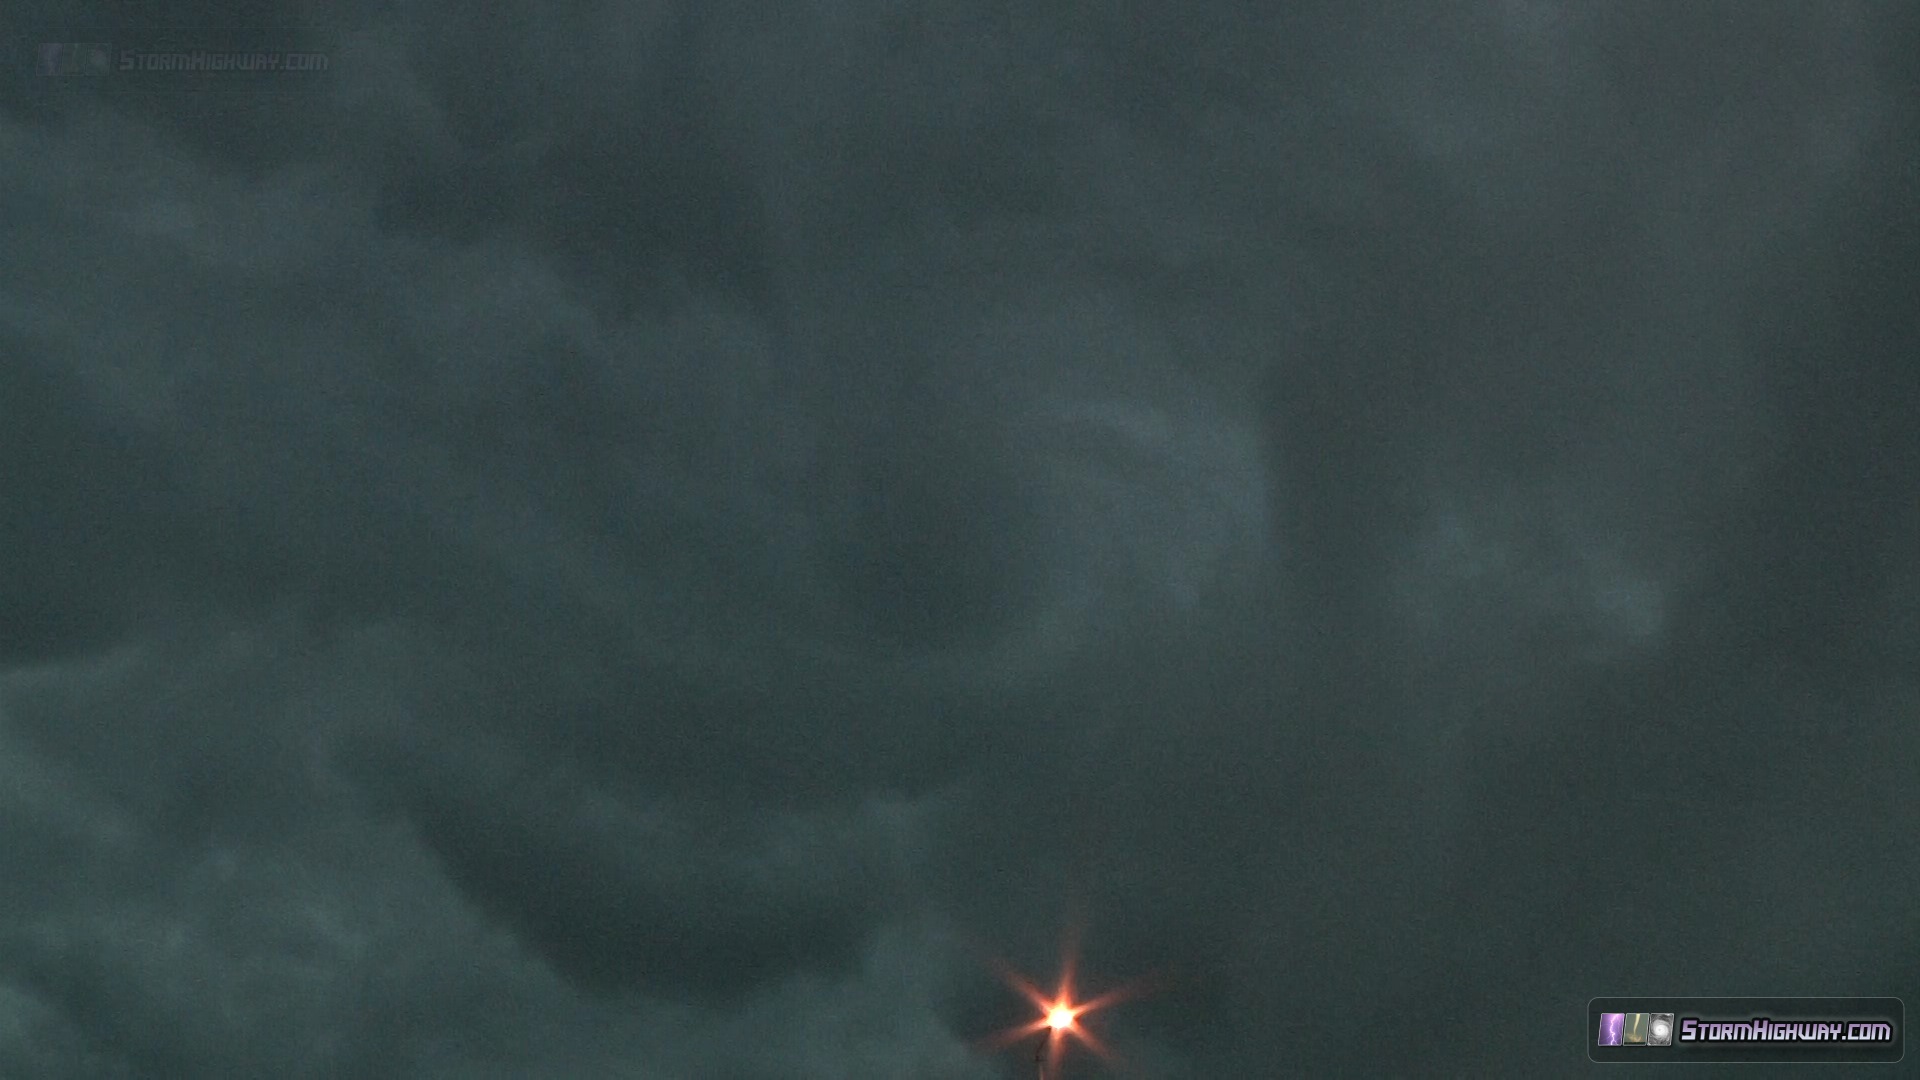 Outflow cloud circulation - Lincoln, Nebraska - June 3, 2014